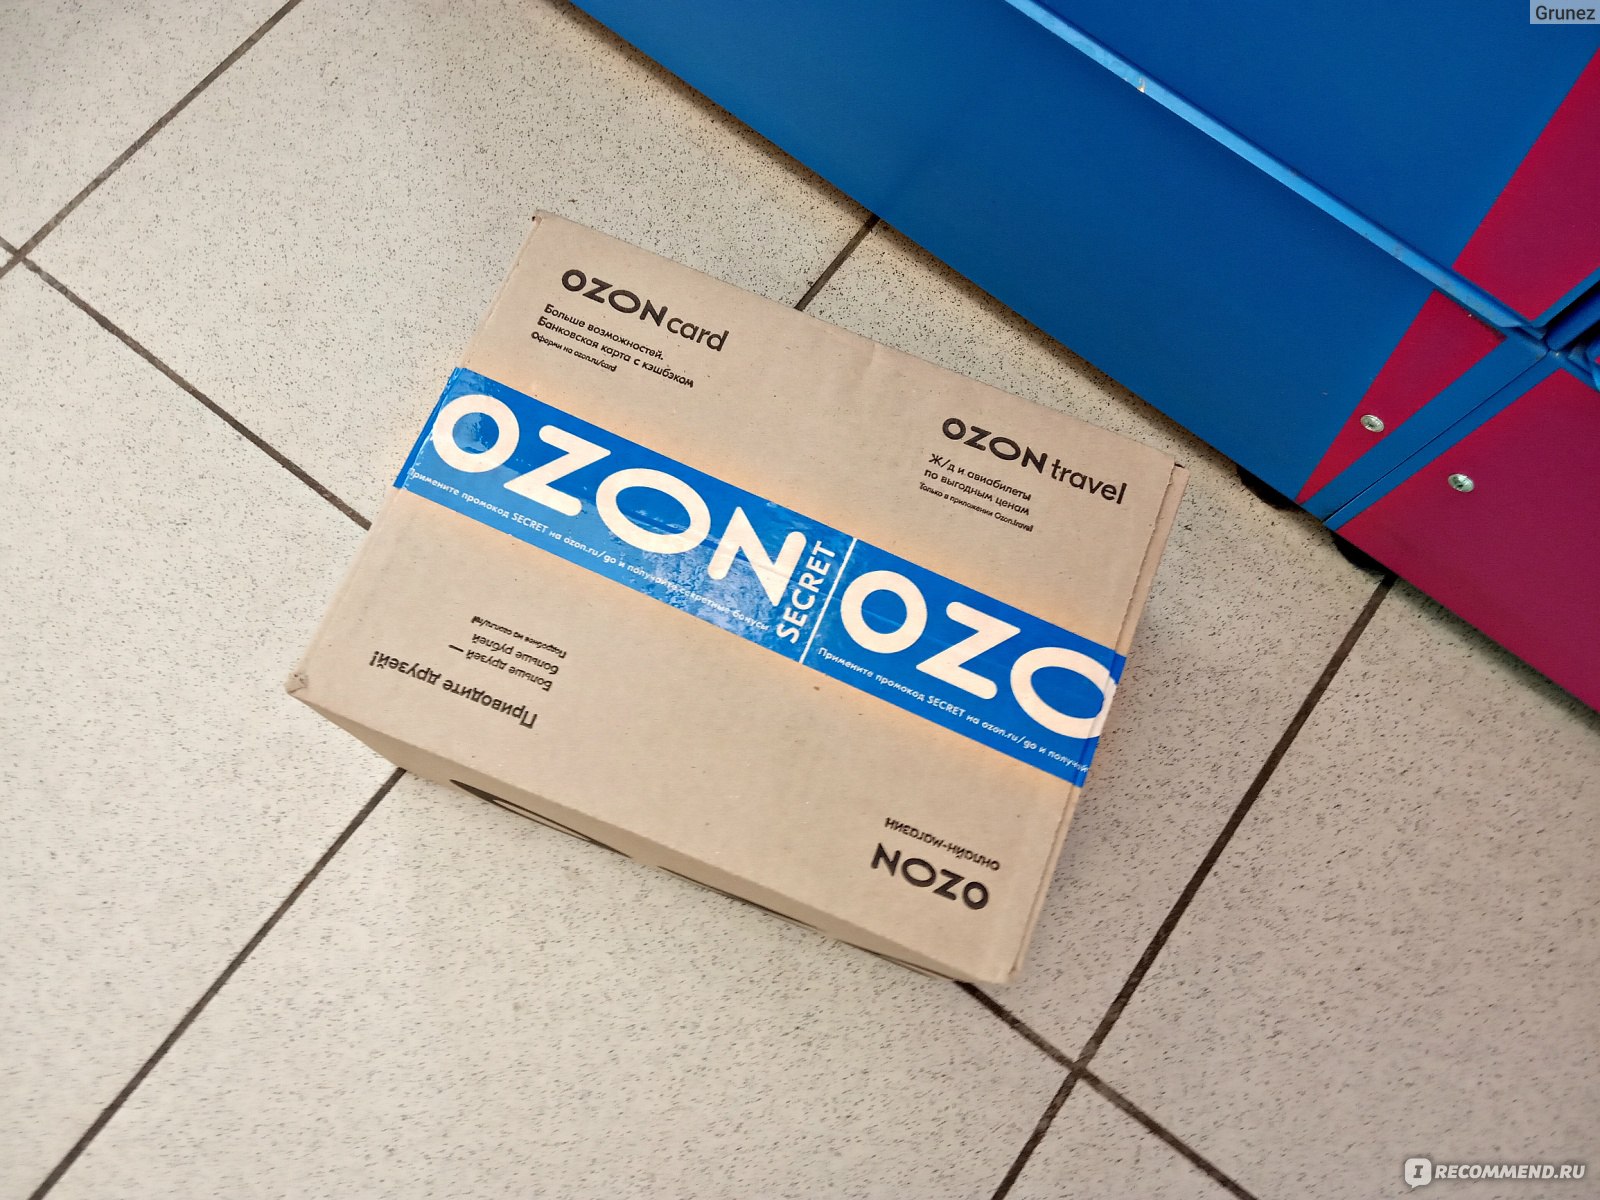 Можно дешевле озон. Коробки Озон. Озон короб. Габариты коробок Озон. Коробка OZON товар.